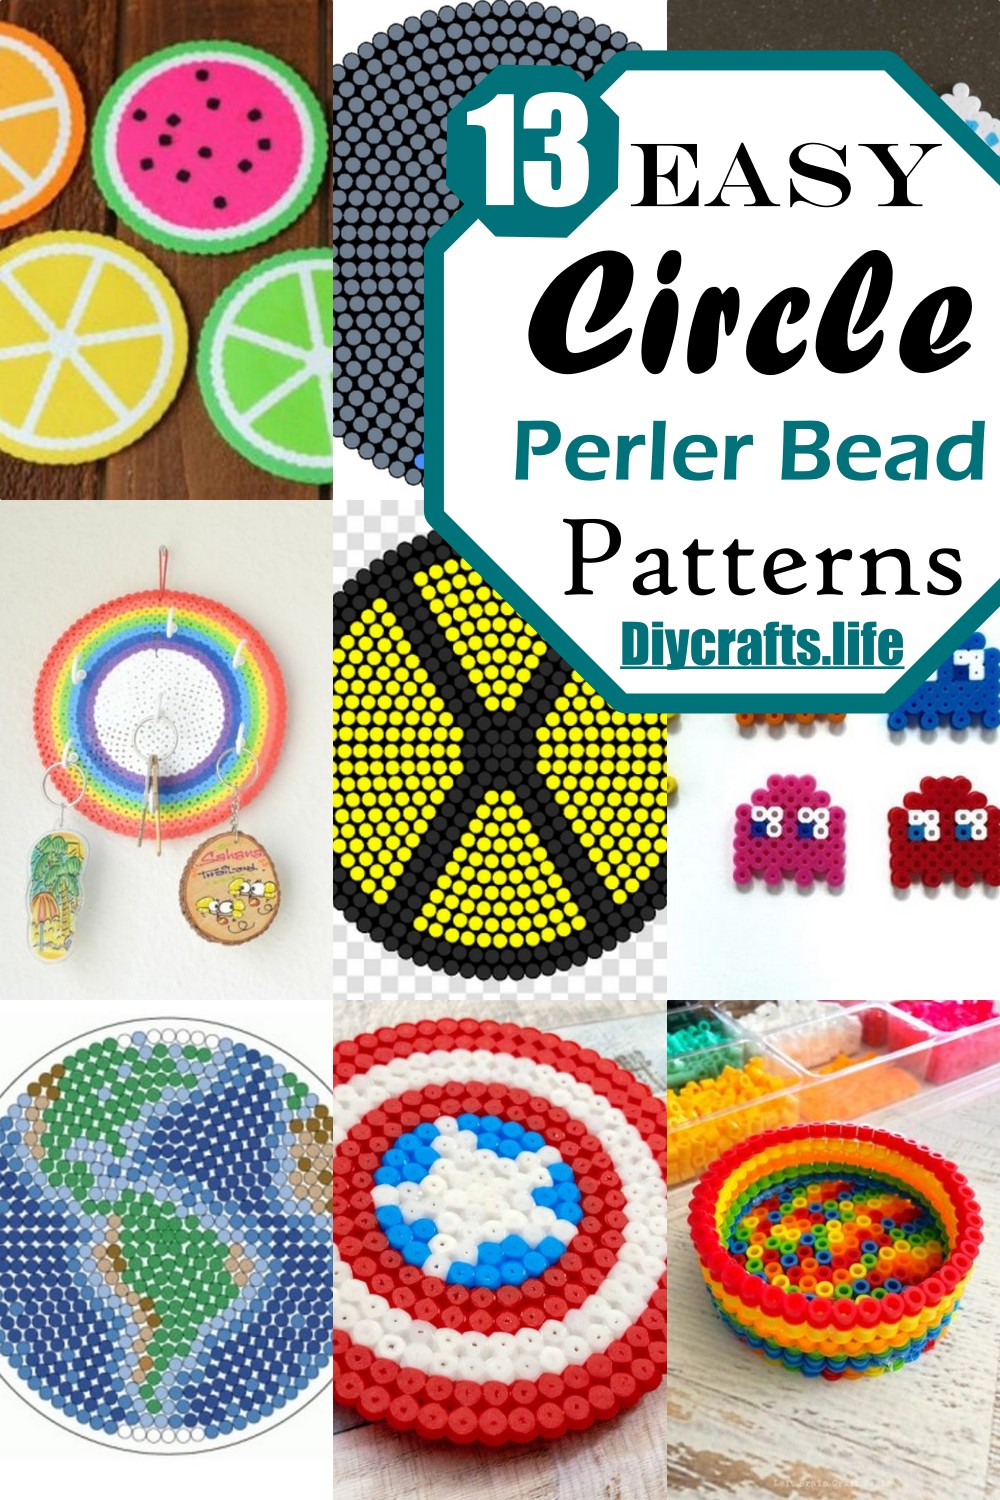 Easy Circle Perler Bead Patterns